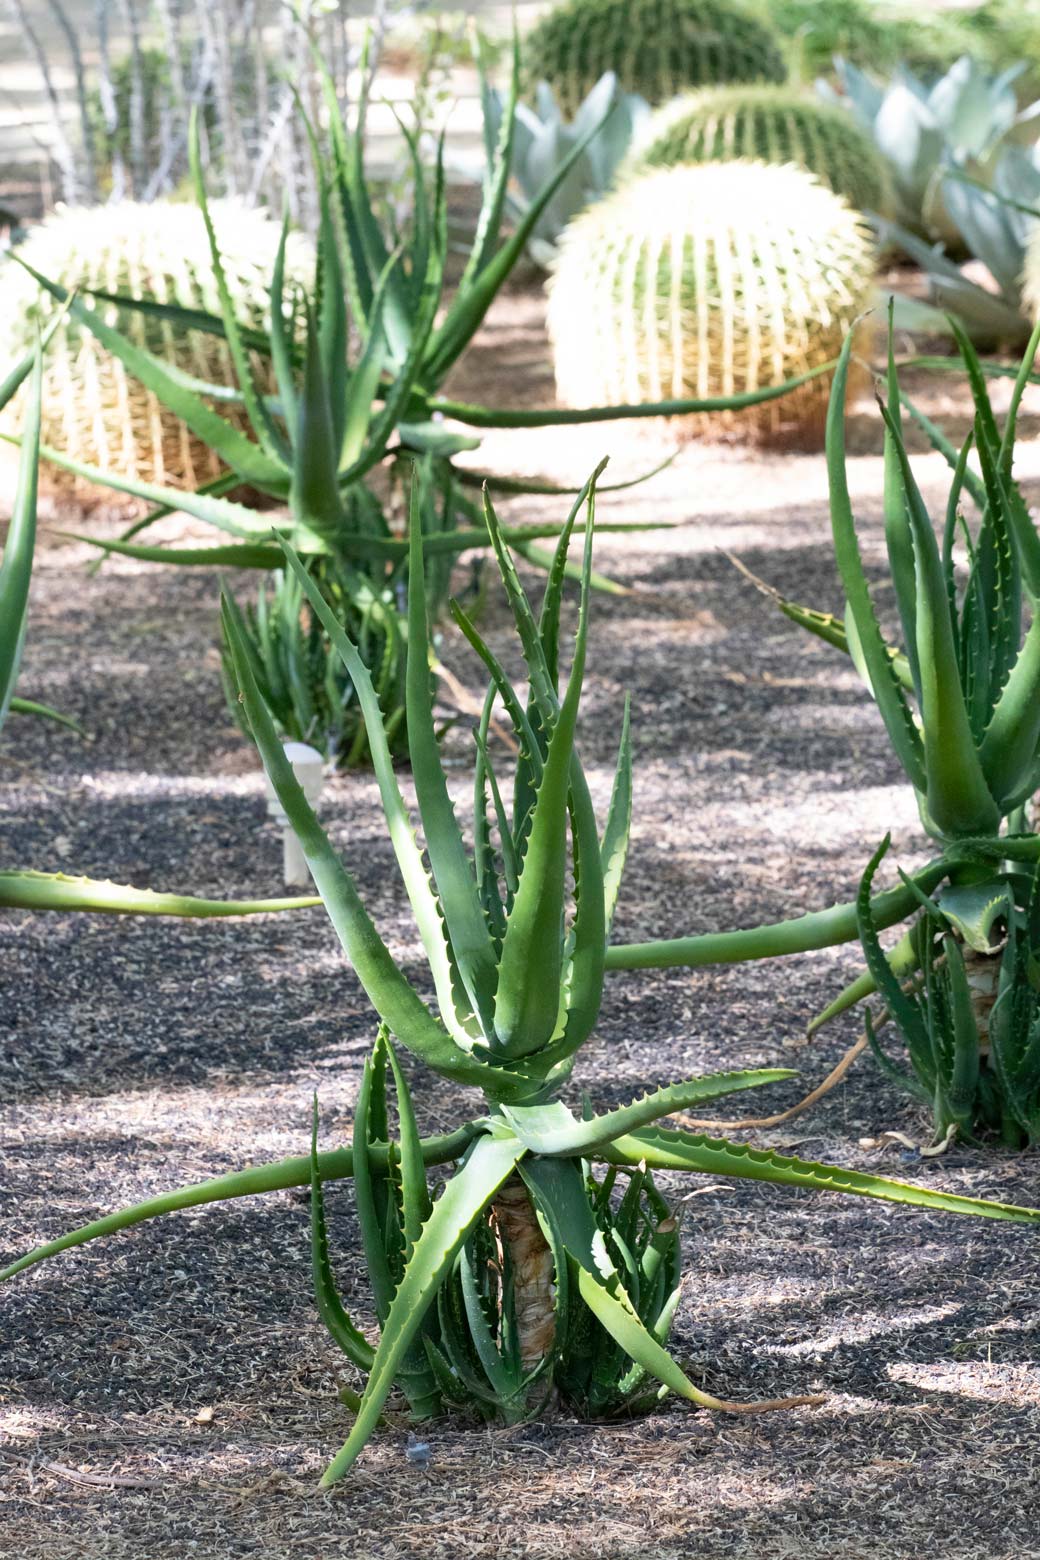 A grouping of Nubian Aloe.